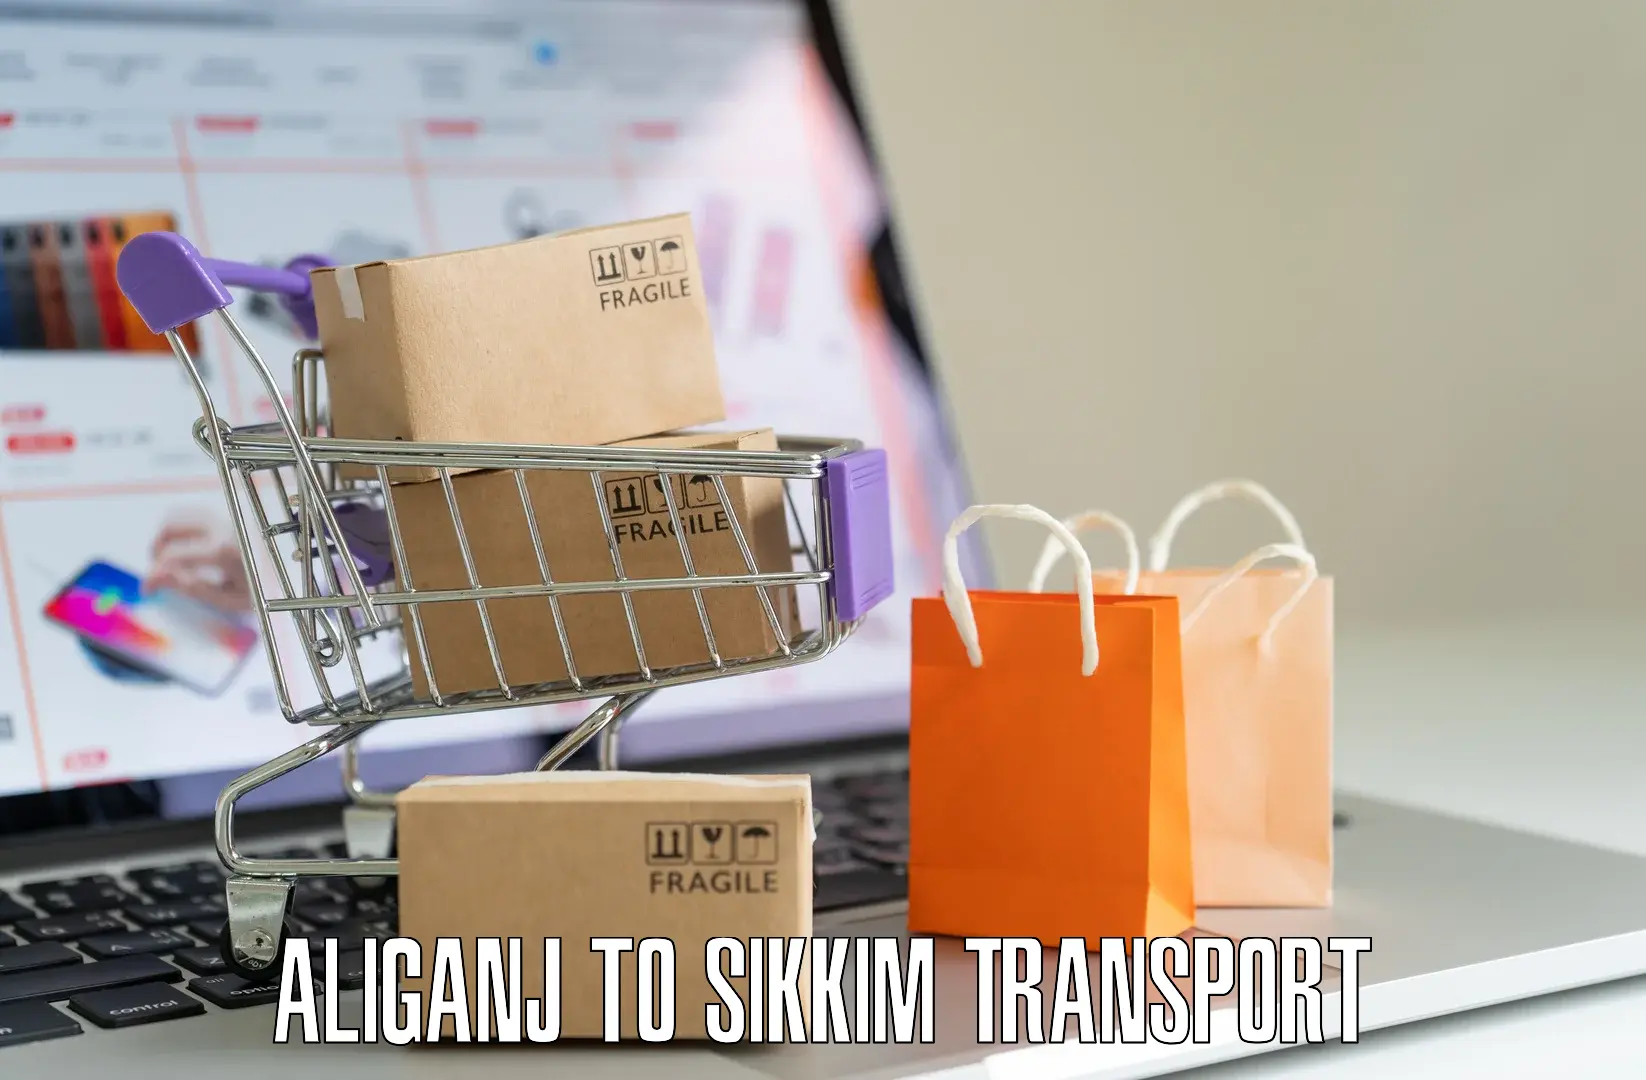 Daily transport service Aliganj to Gangtok